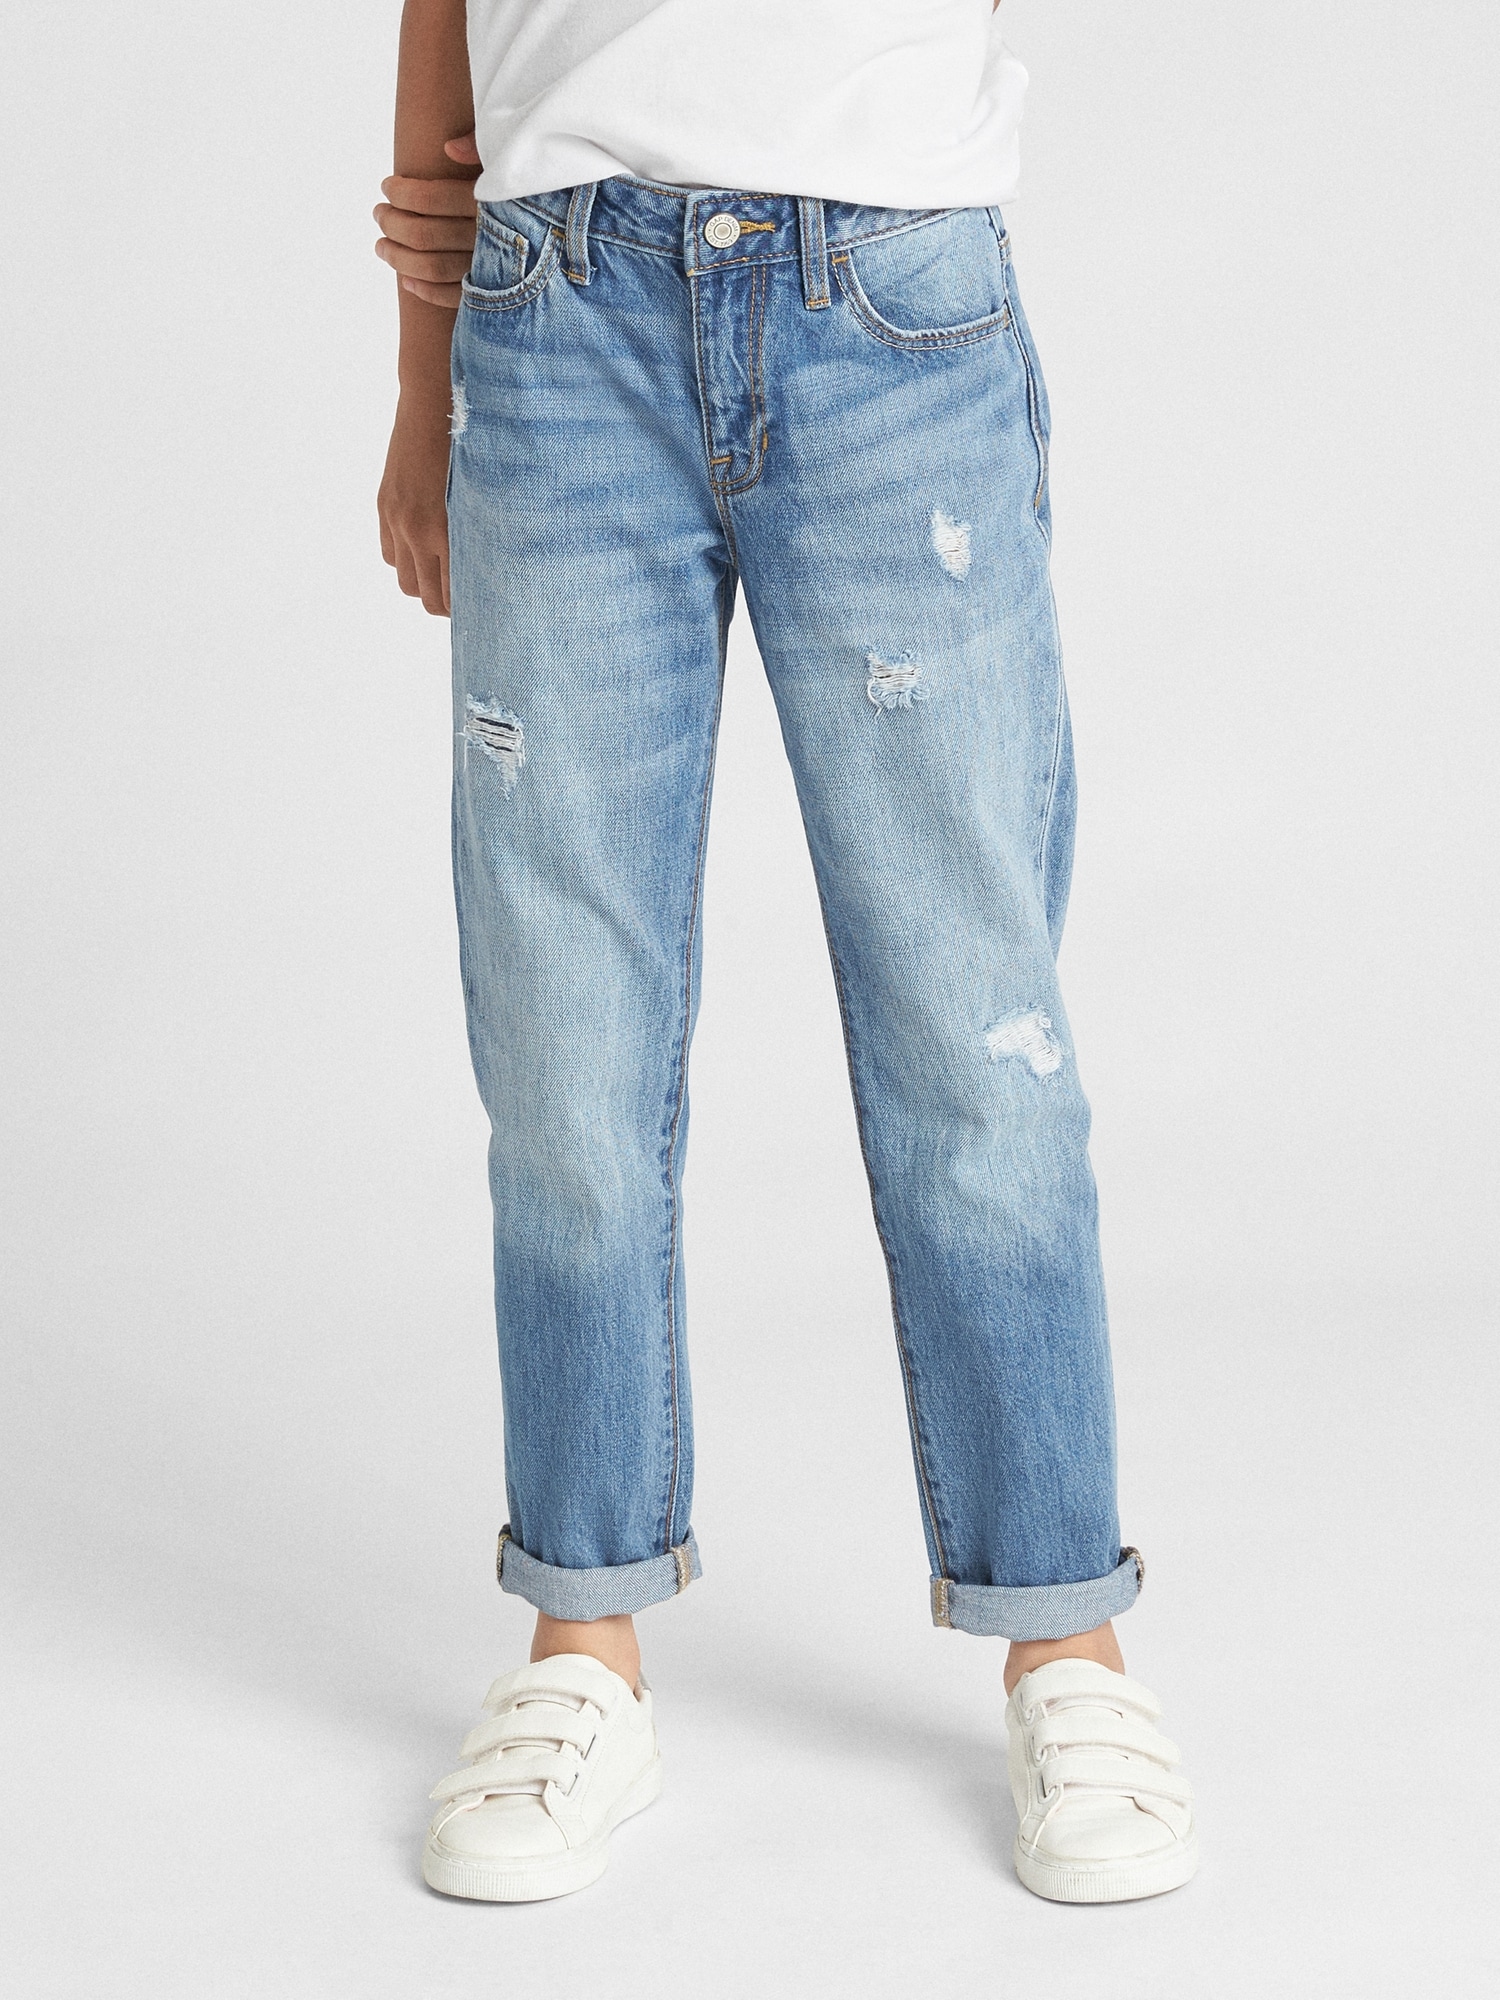 cinch carter 2.4 jeans